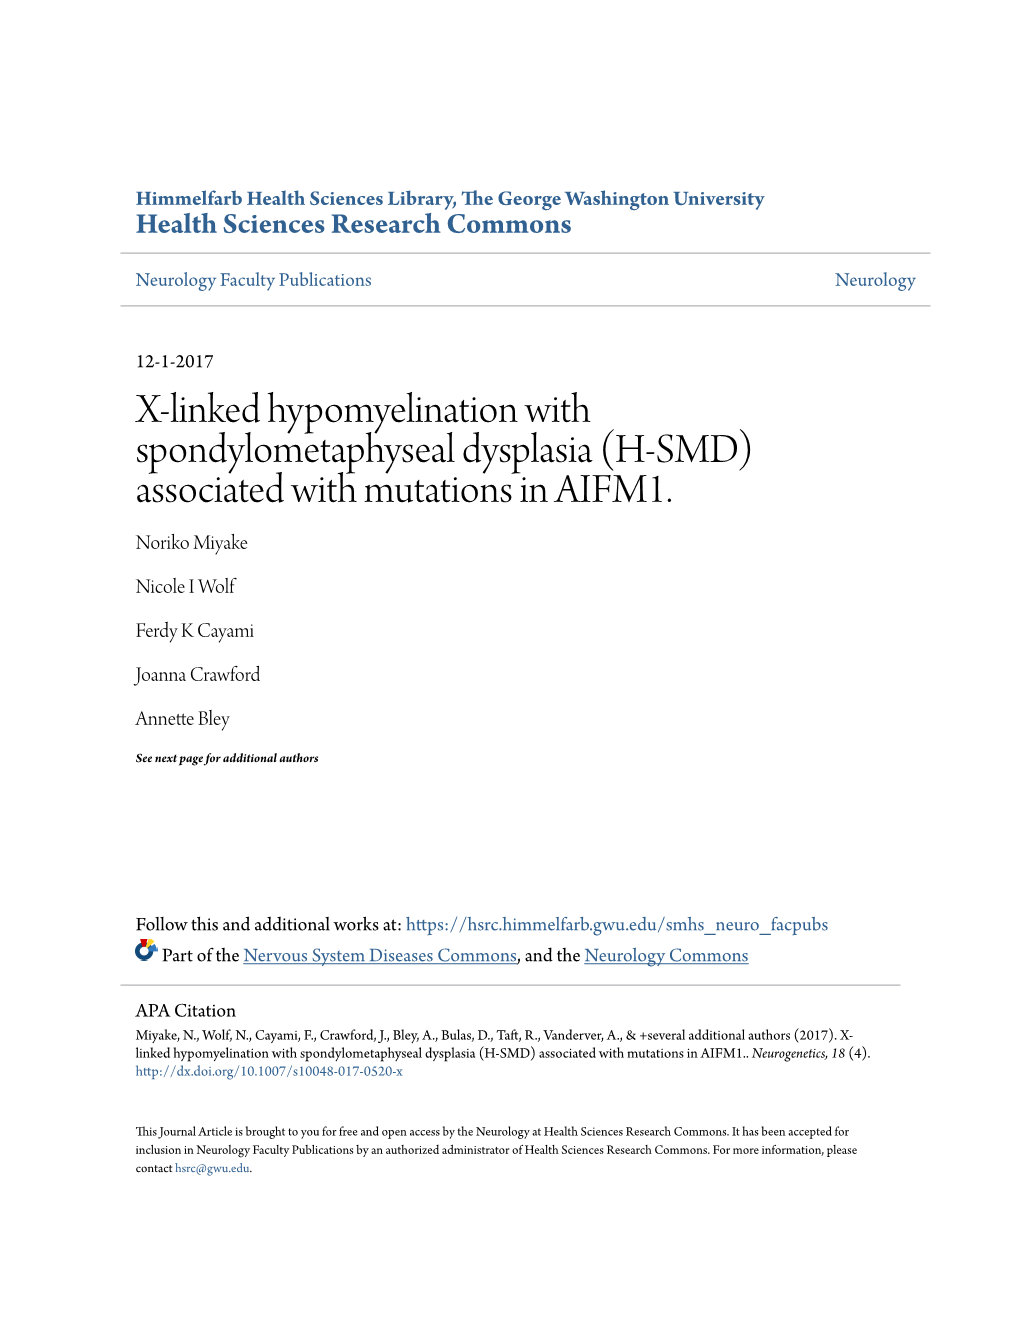 X-Linked Hypomyelination with Spondylometaphyseal Dysplasia (H-SMD) Associated with Mutations in AIFM1